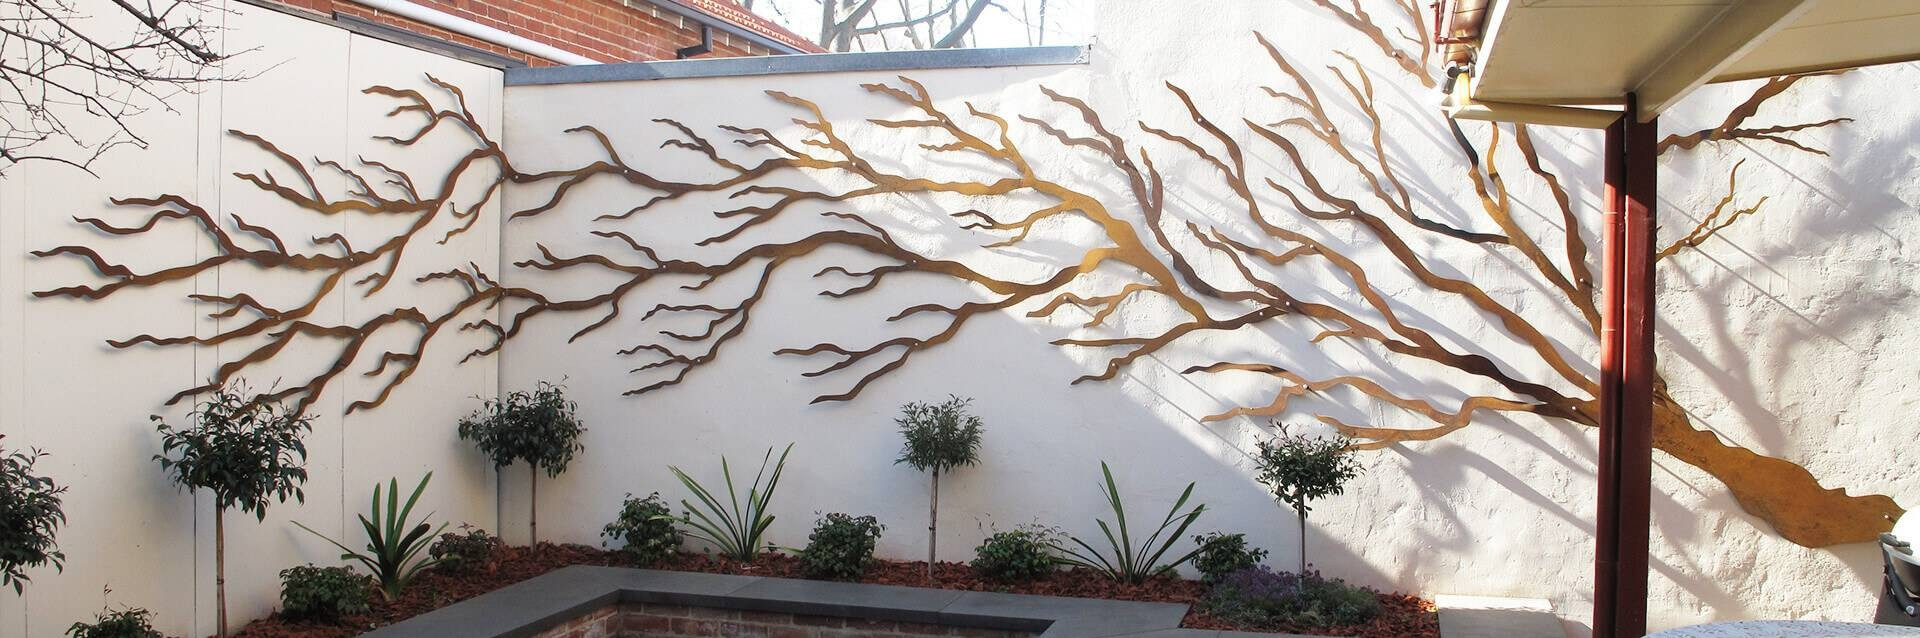 Best ideas about Garden Wall Artwork
. Save or Pin 32 Best Ideas of Metal Gate Wall Art Now.